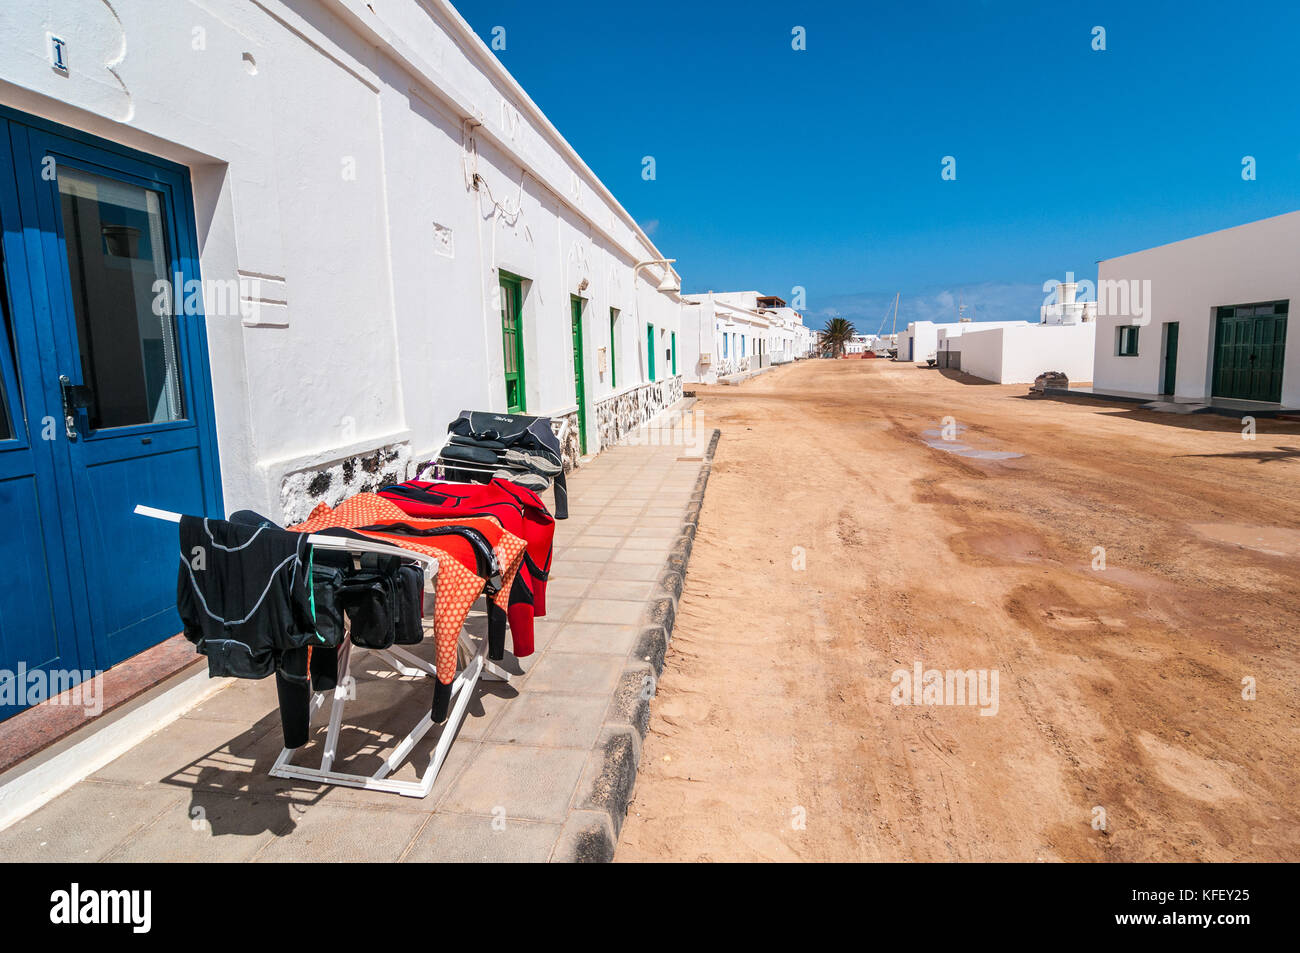 Le séchage de l'équipement de plongée au milieu de la rue, Caleta del Sebo, La Graciosa, îles de Canaries, Espagne Banque D'Images